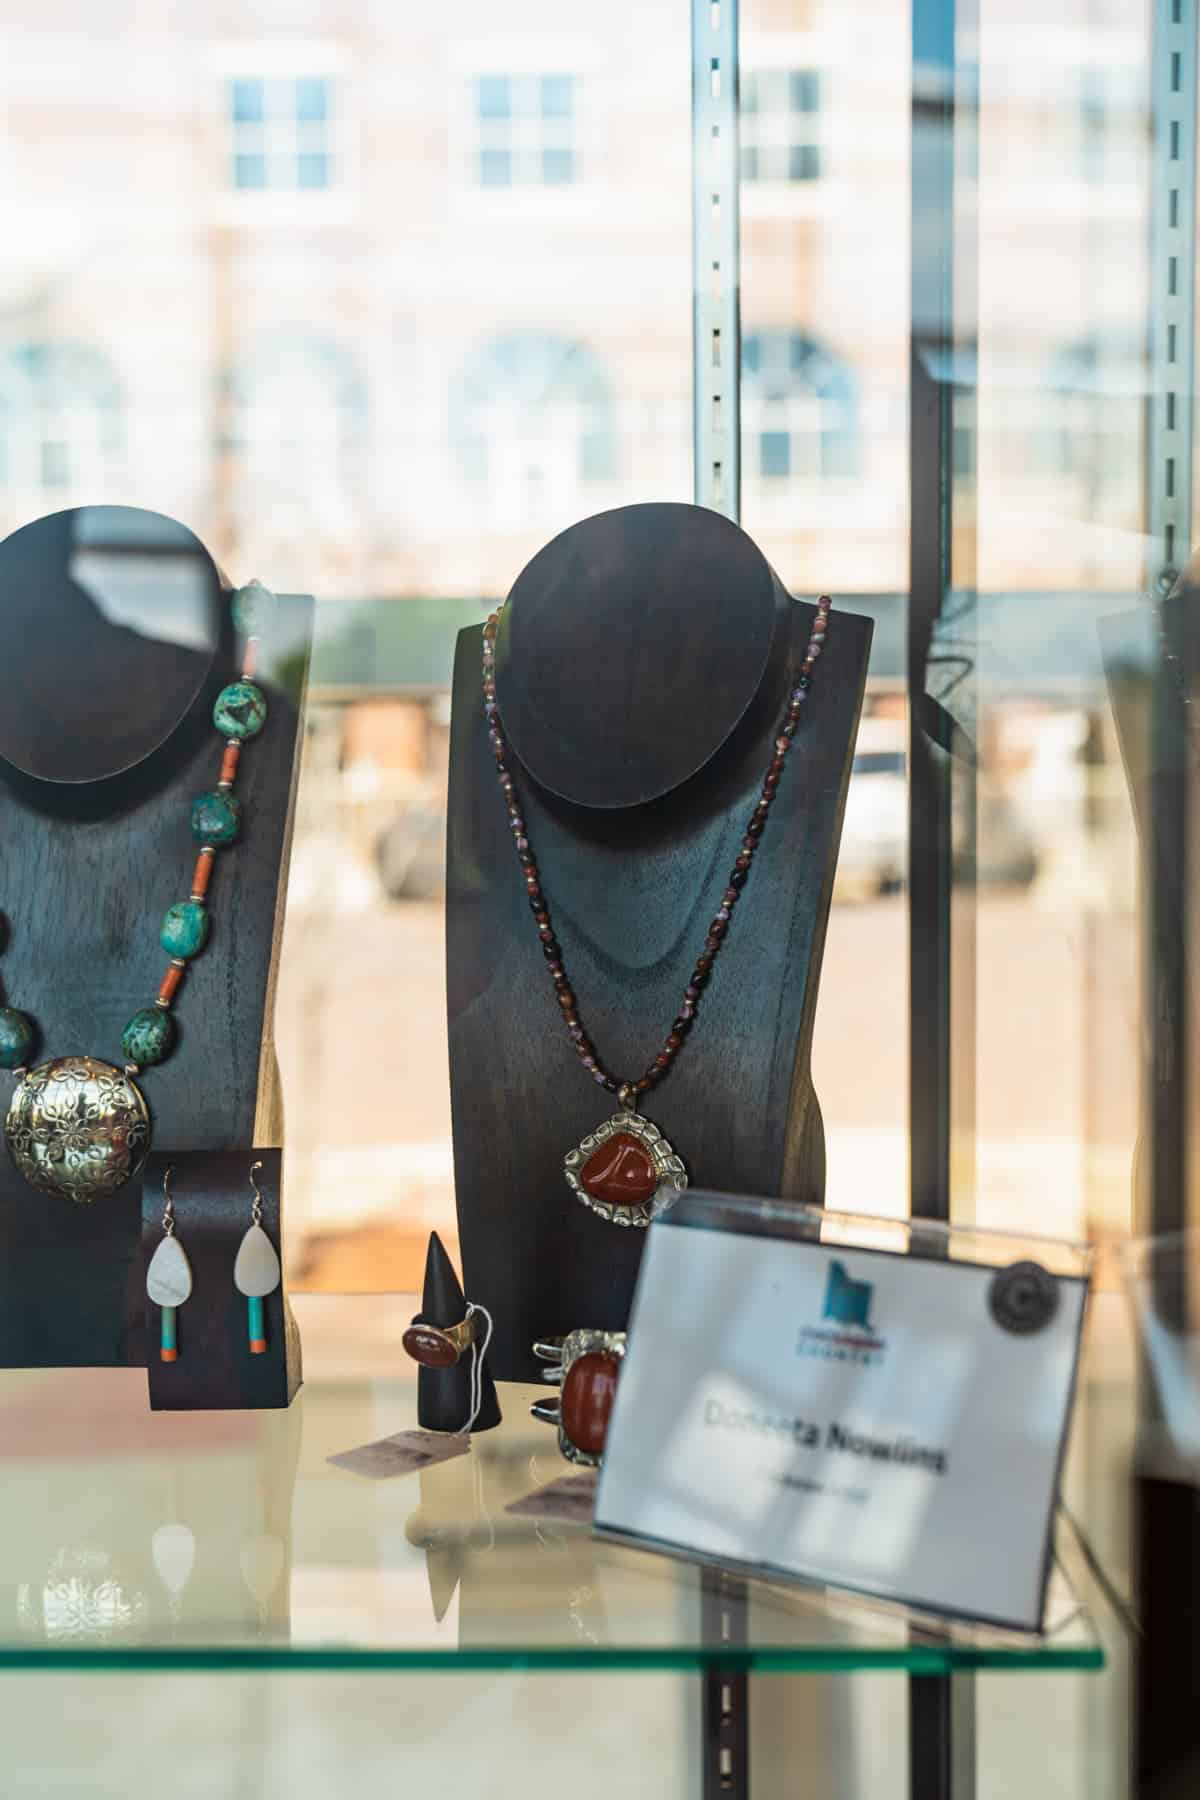 Native-made jewelry on display